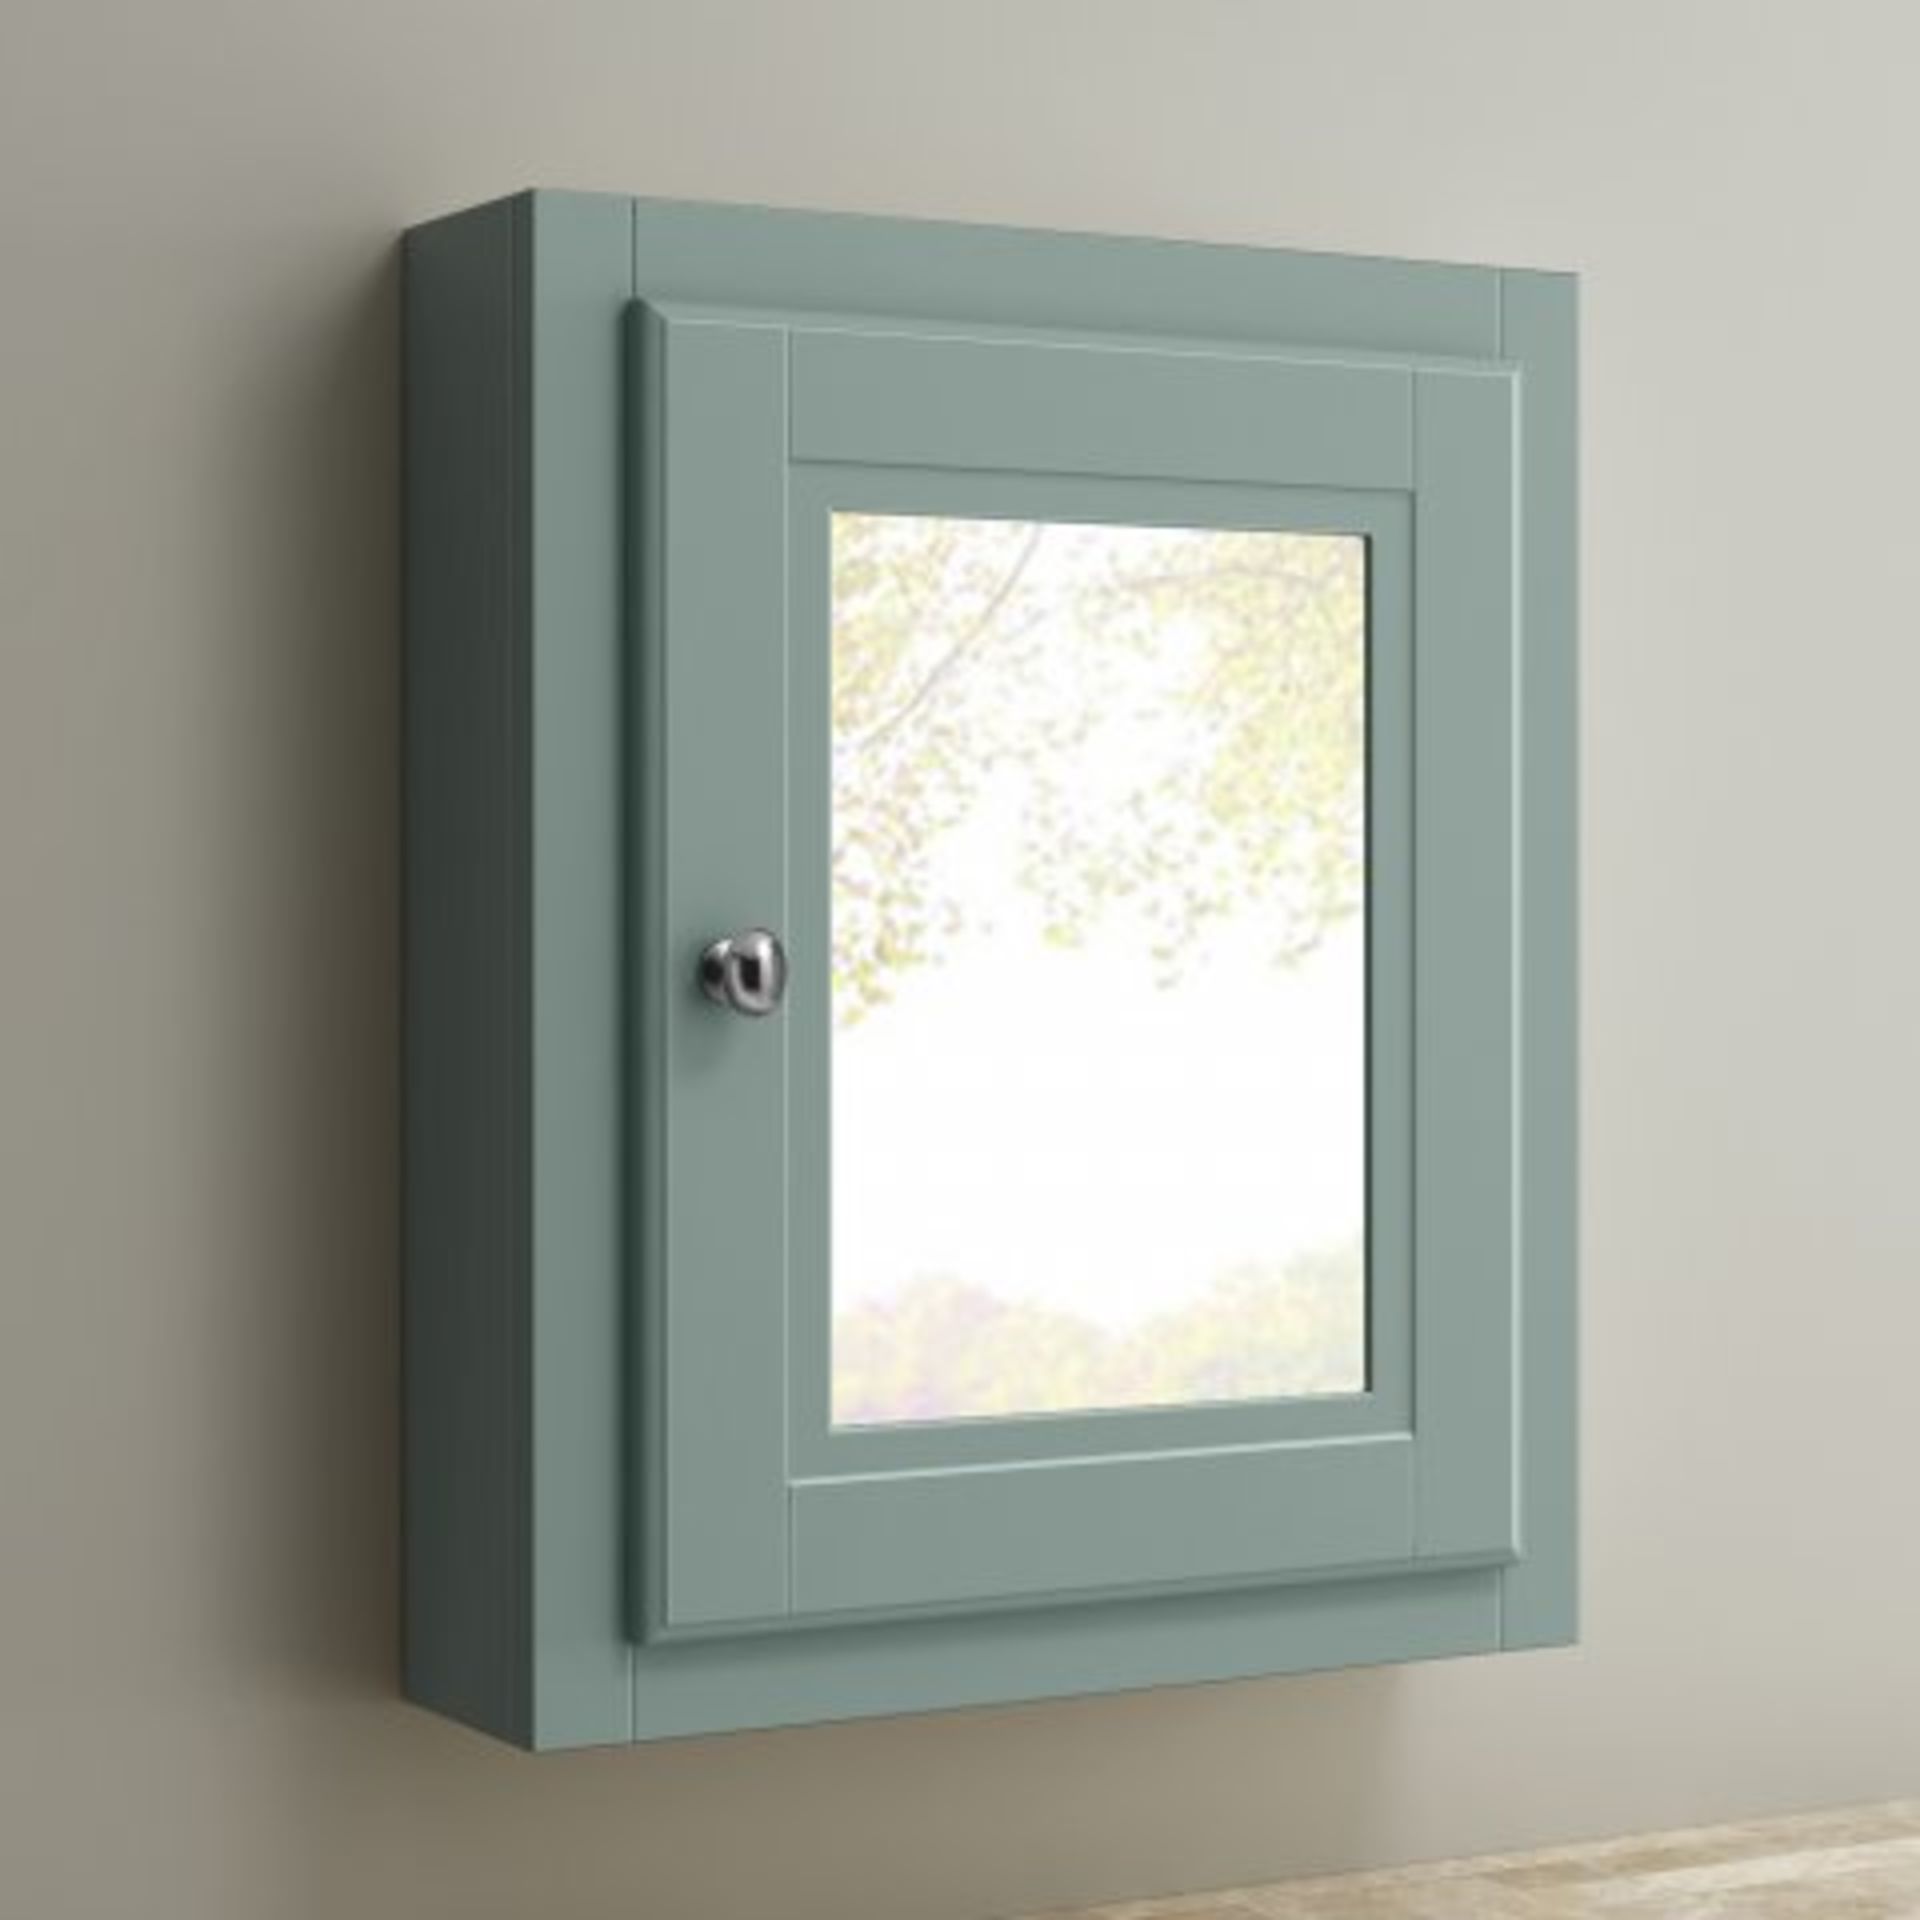 (V51) Cambridge Single Door Mirror Cabinet - Marine Mist RRP £224.99 Our Interior Designer says...